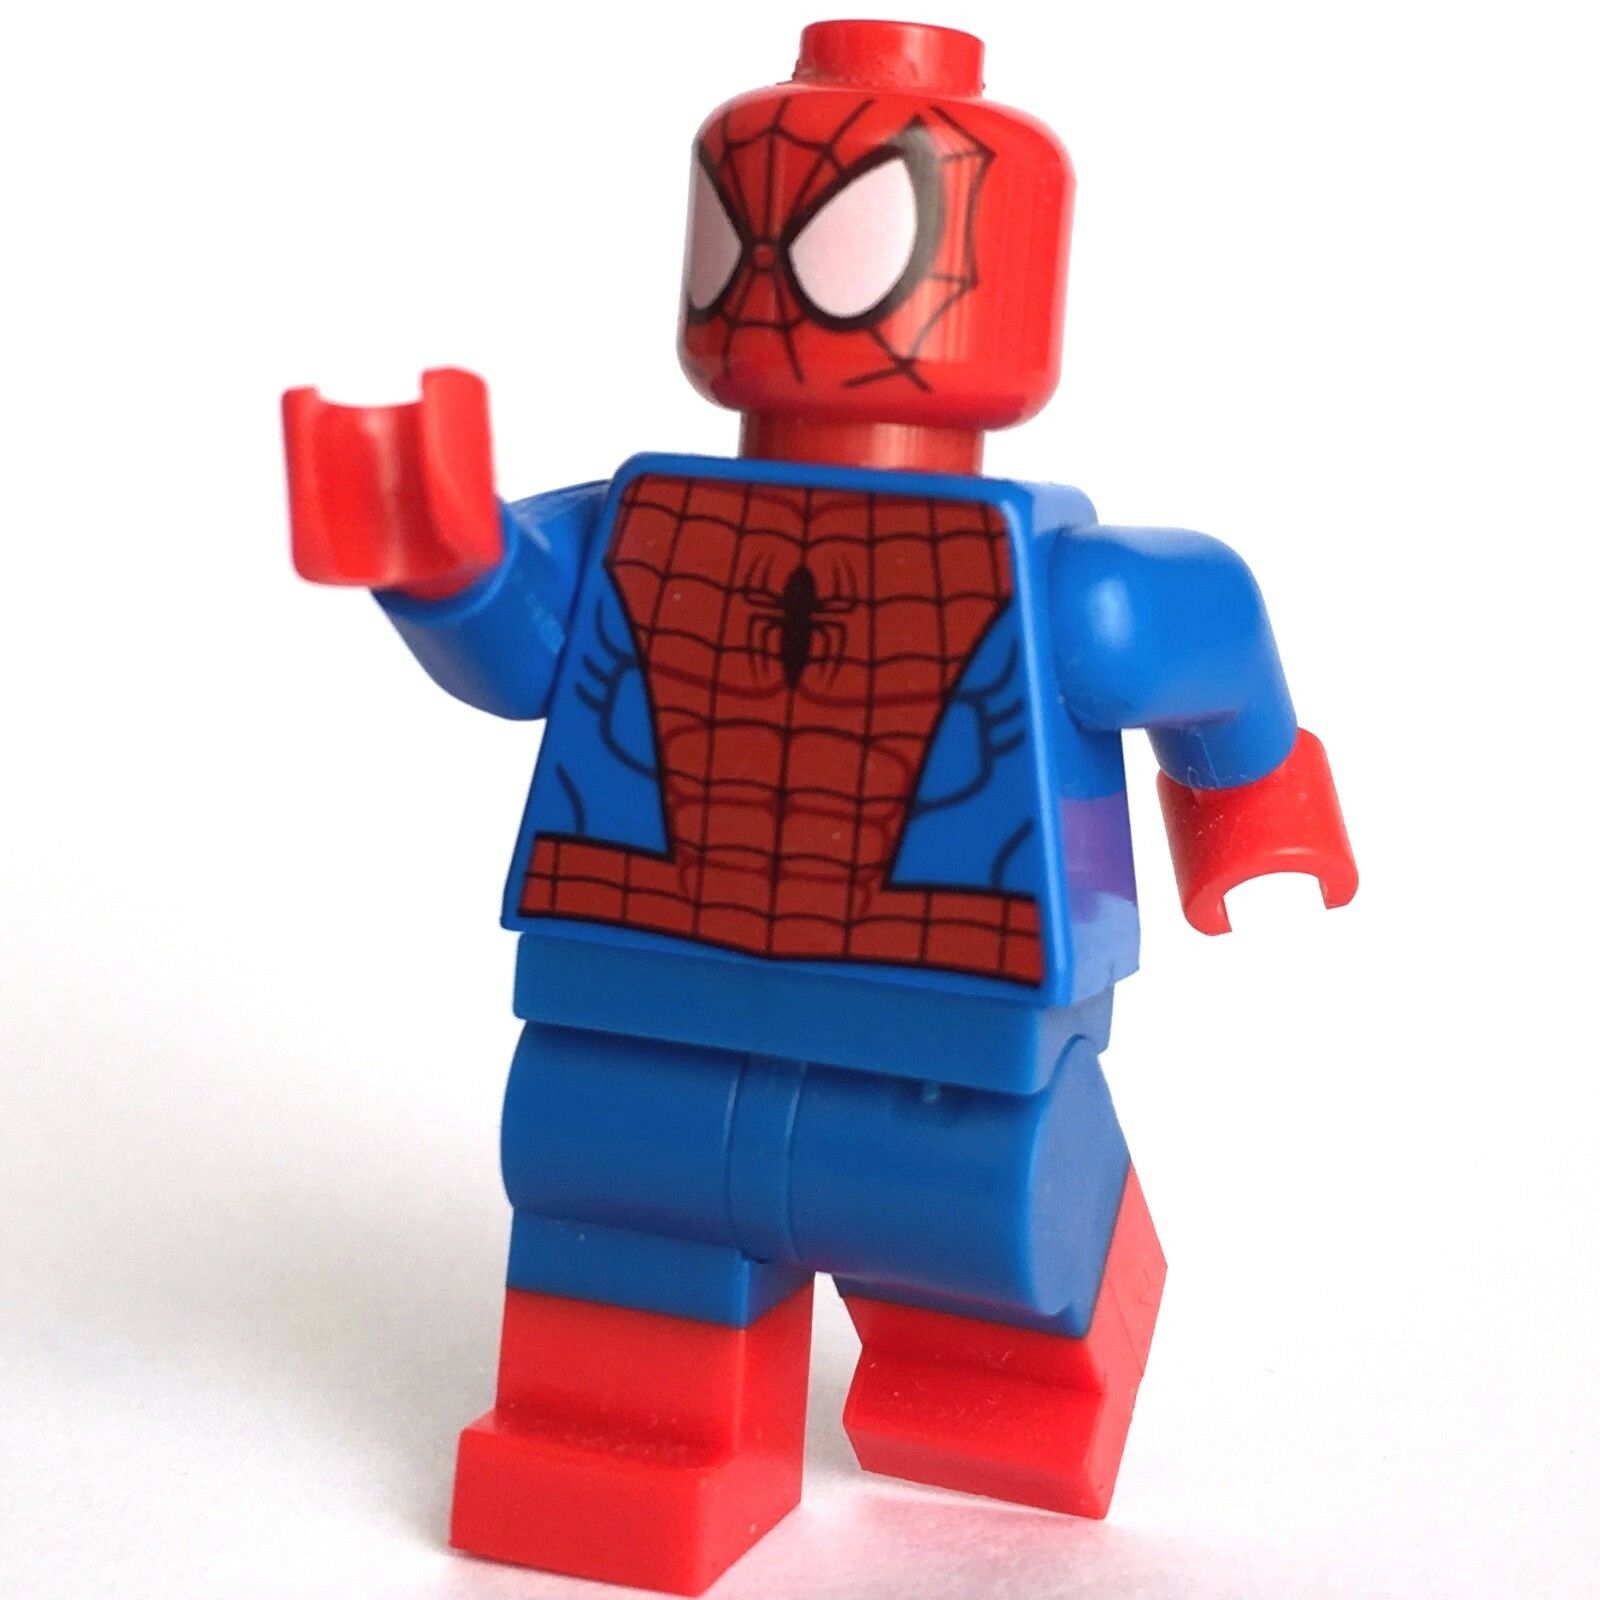 MARVEL lego SPIDERMAN super heroes GENUINE Minifigure NEW red boot 76037 spider-man - Bricks & Figures